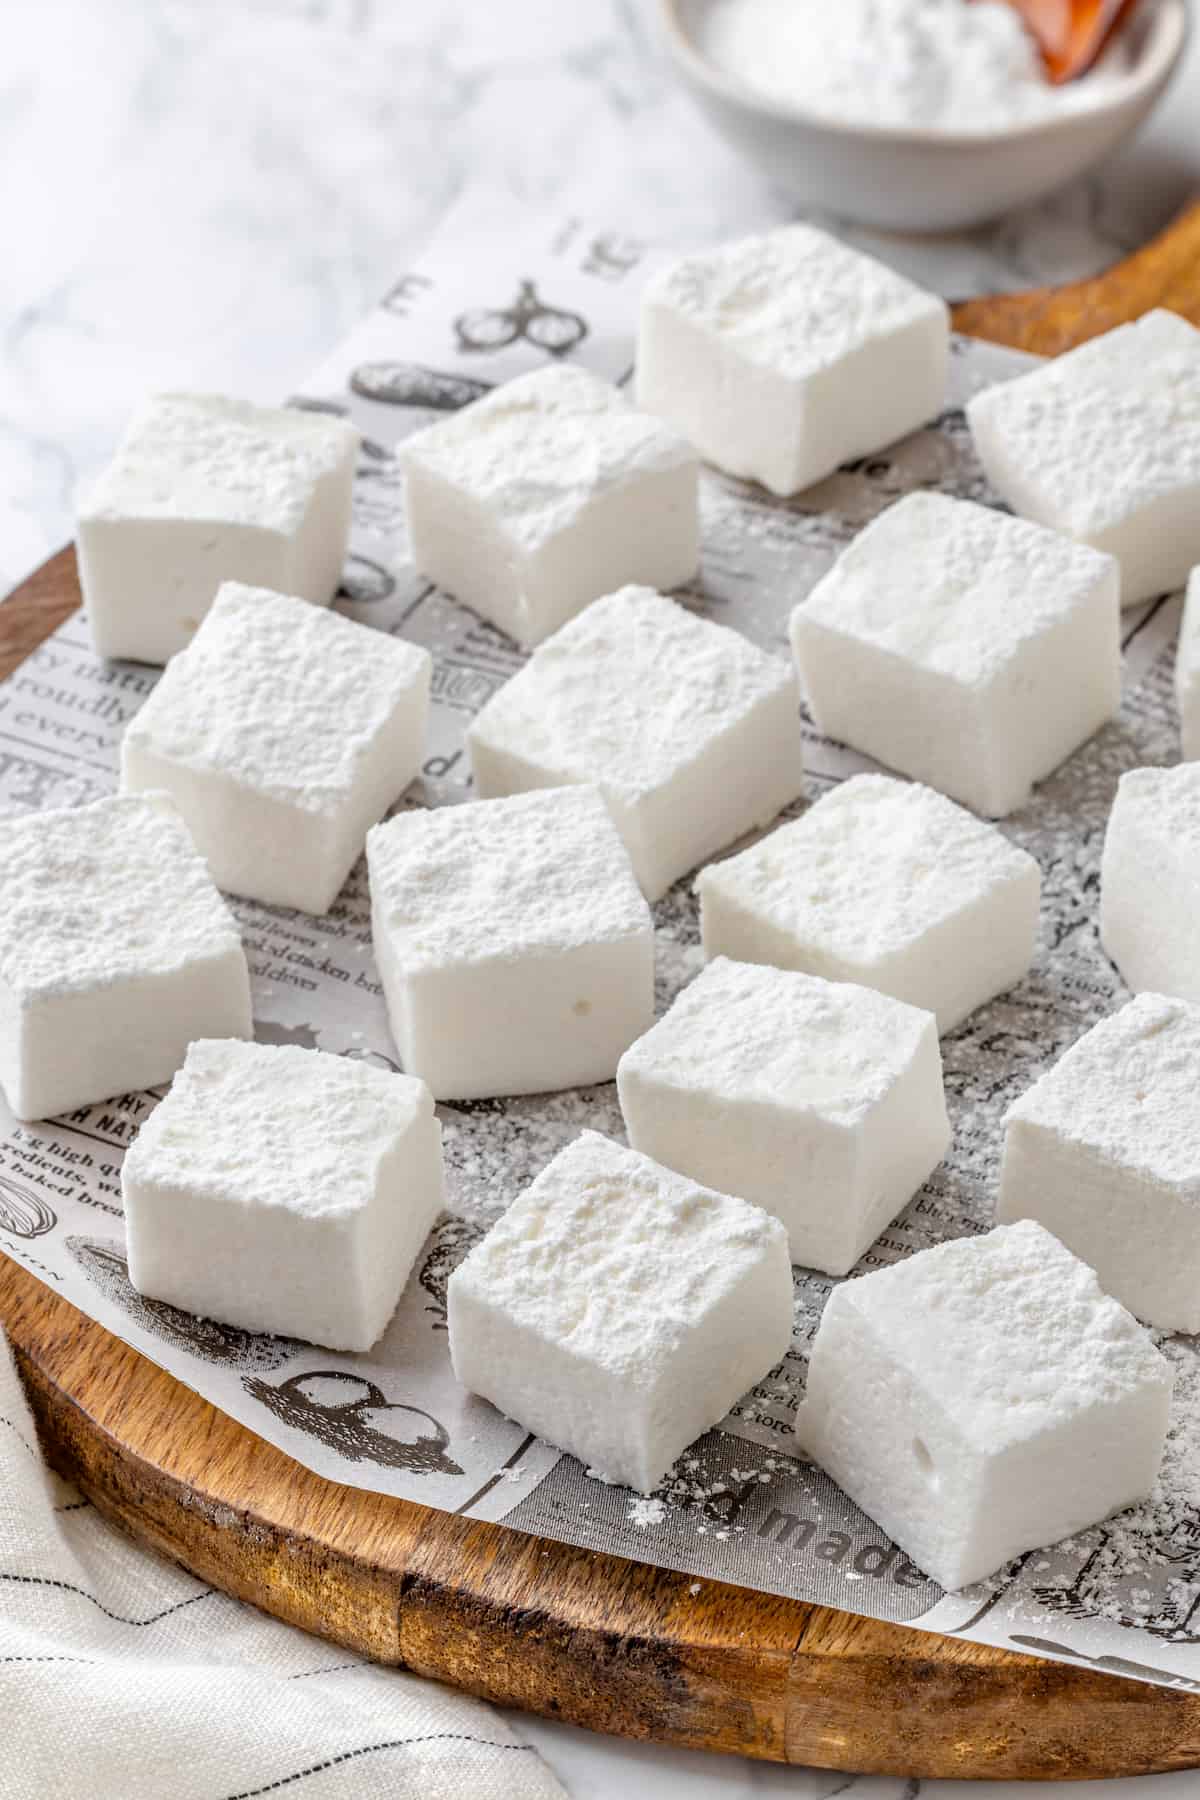 Vegan marshmallows arranged on newspaper-lined cutting board